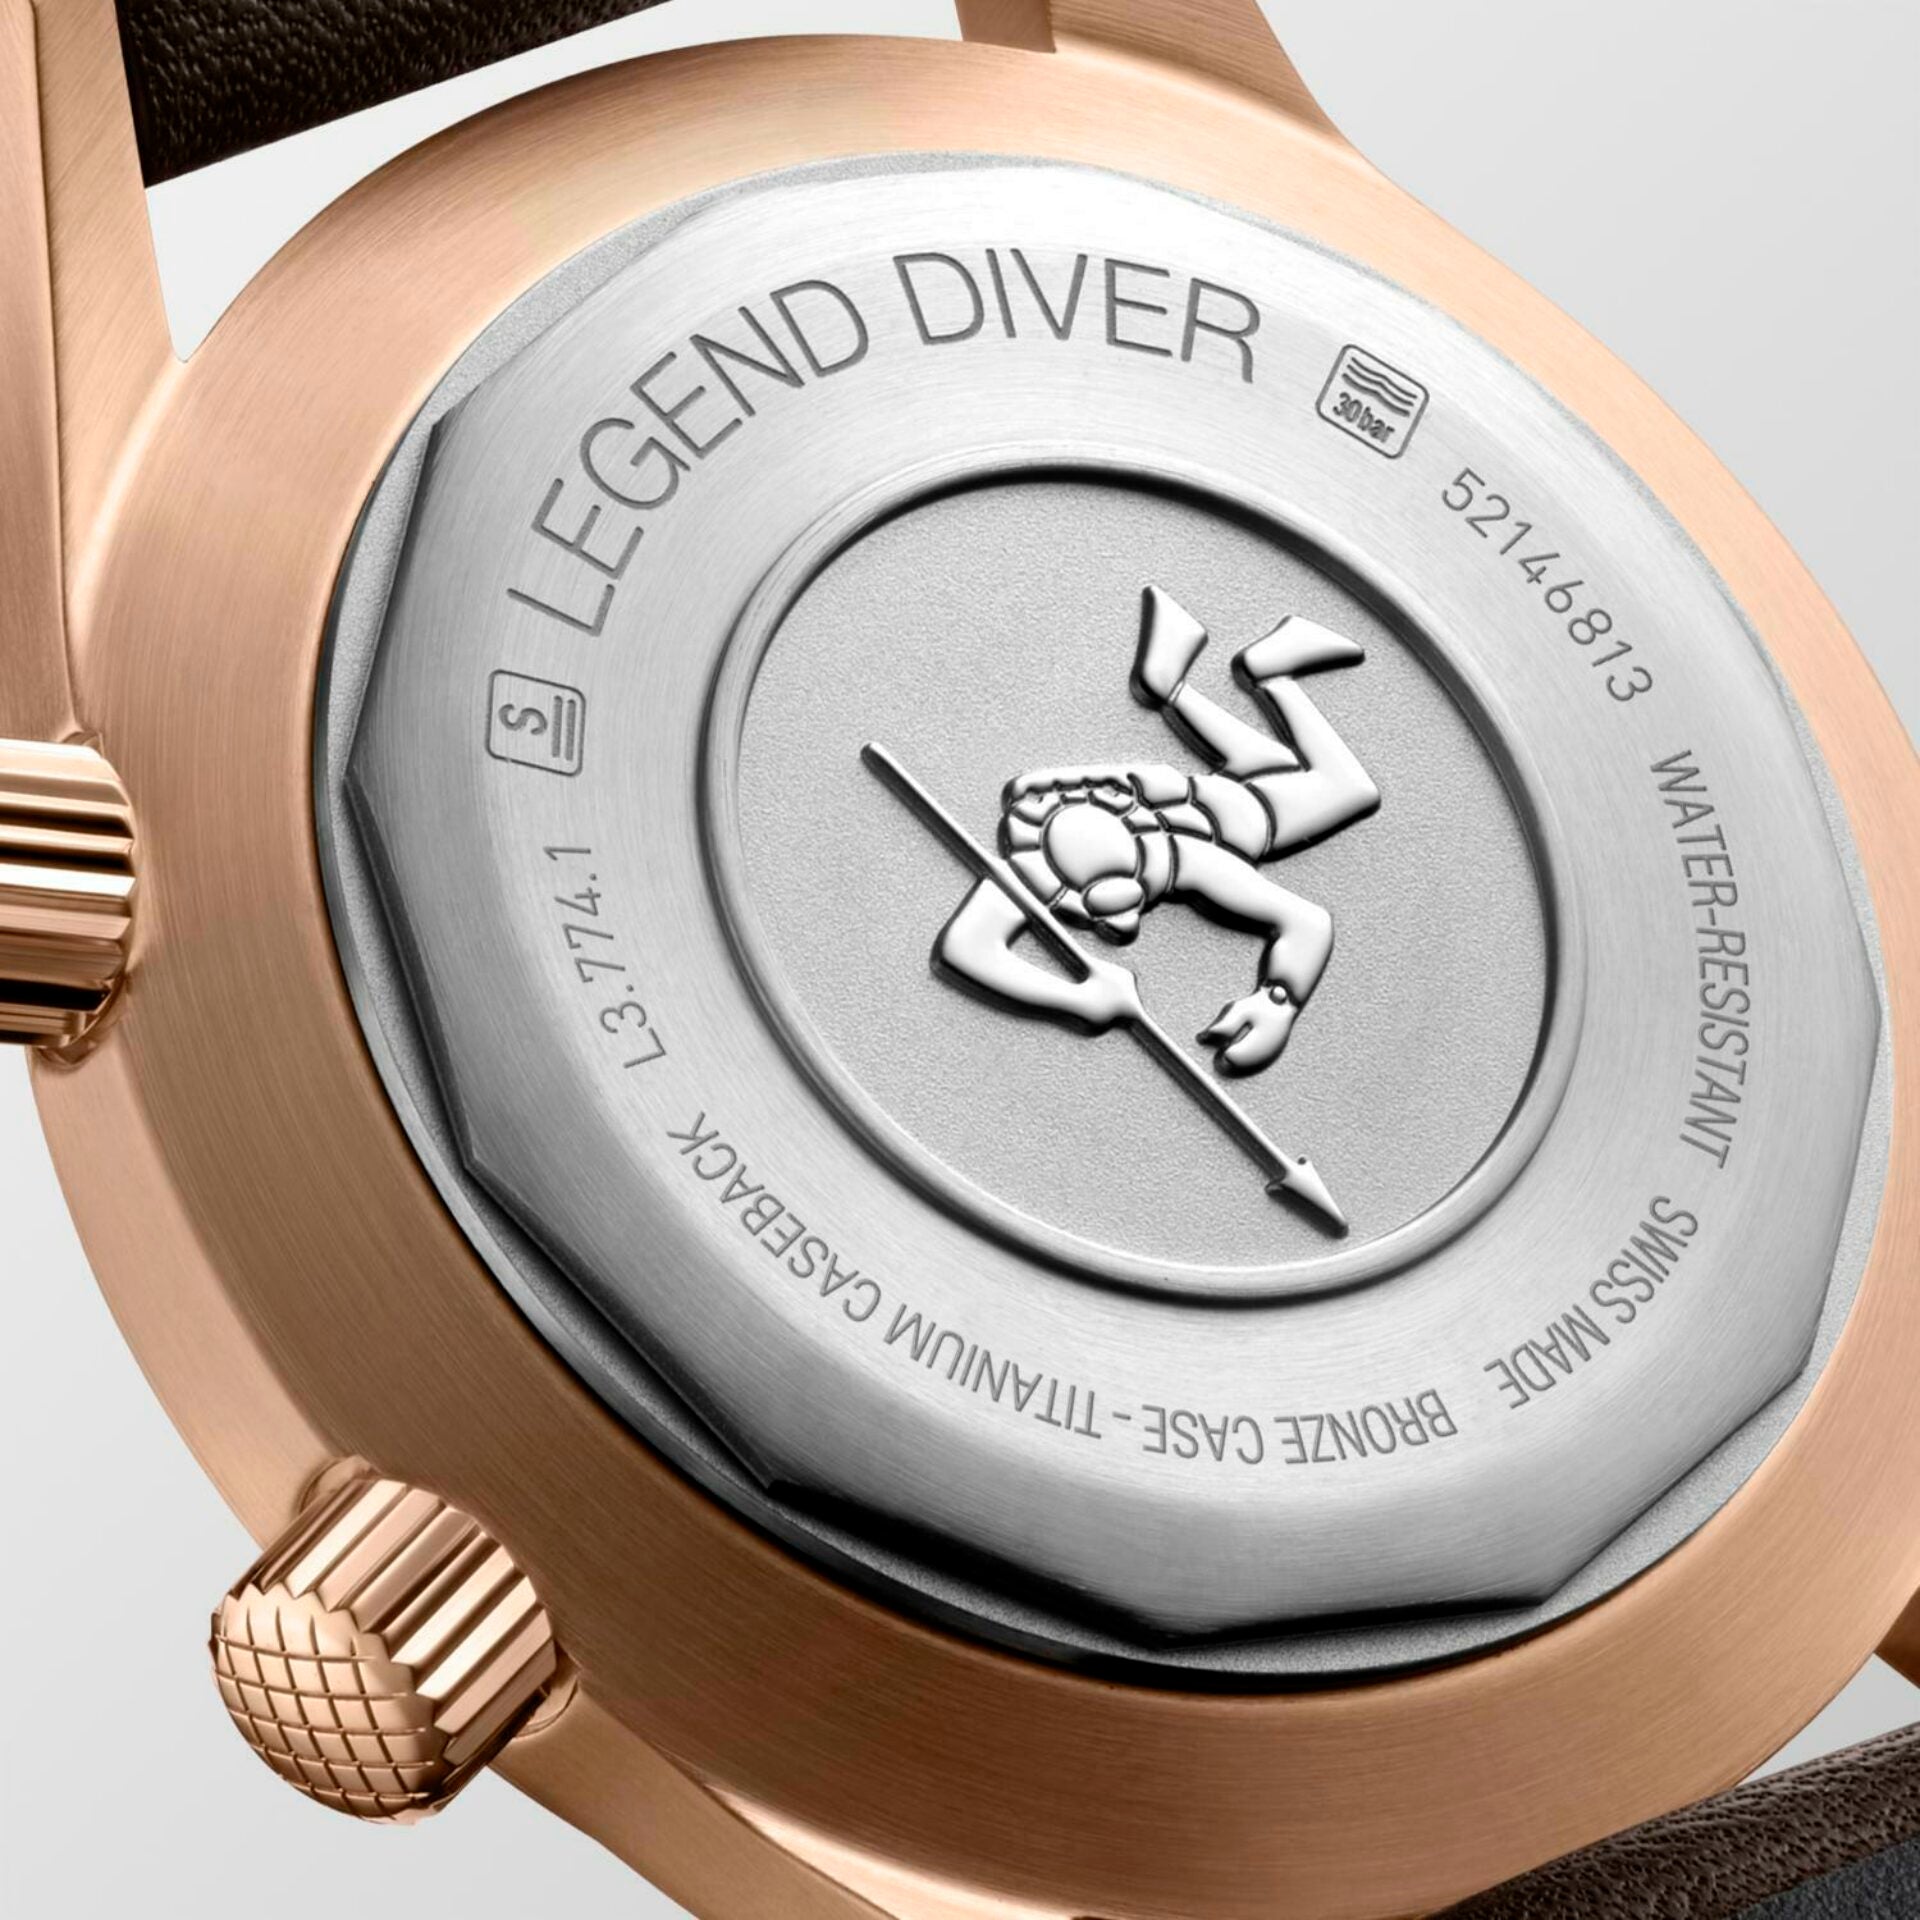 Longines Legend Diver 42mm | Best Divers Watch | Harley's Time LLC